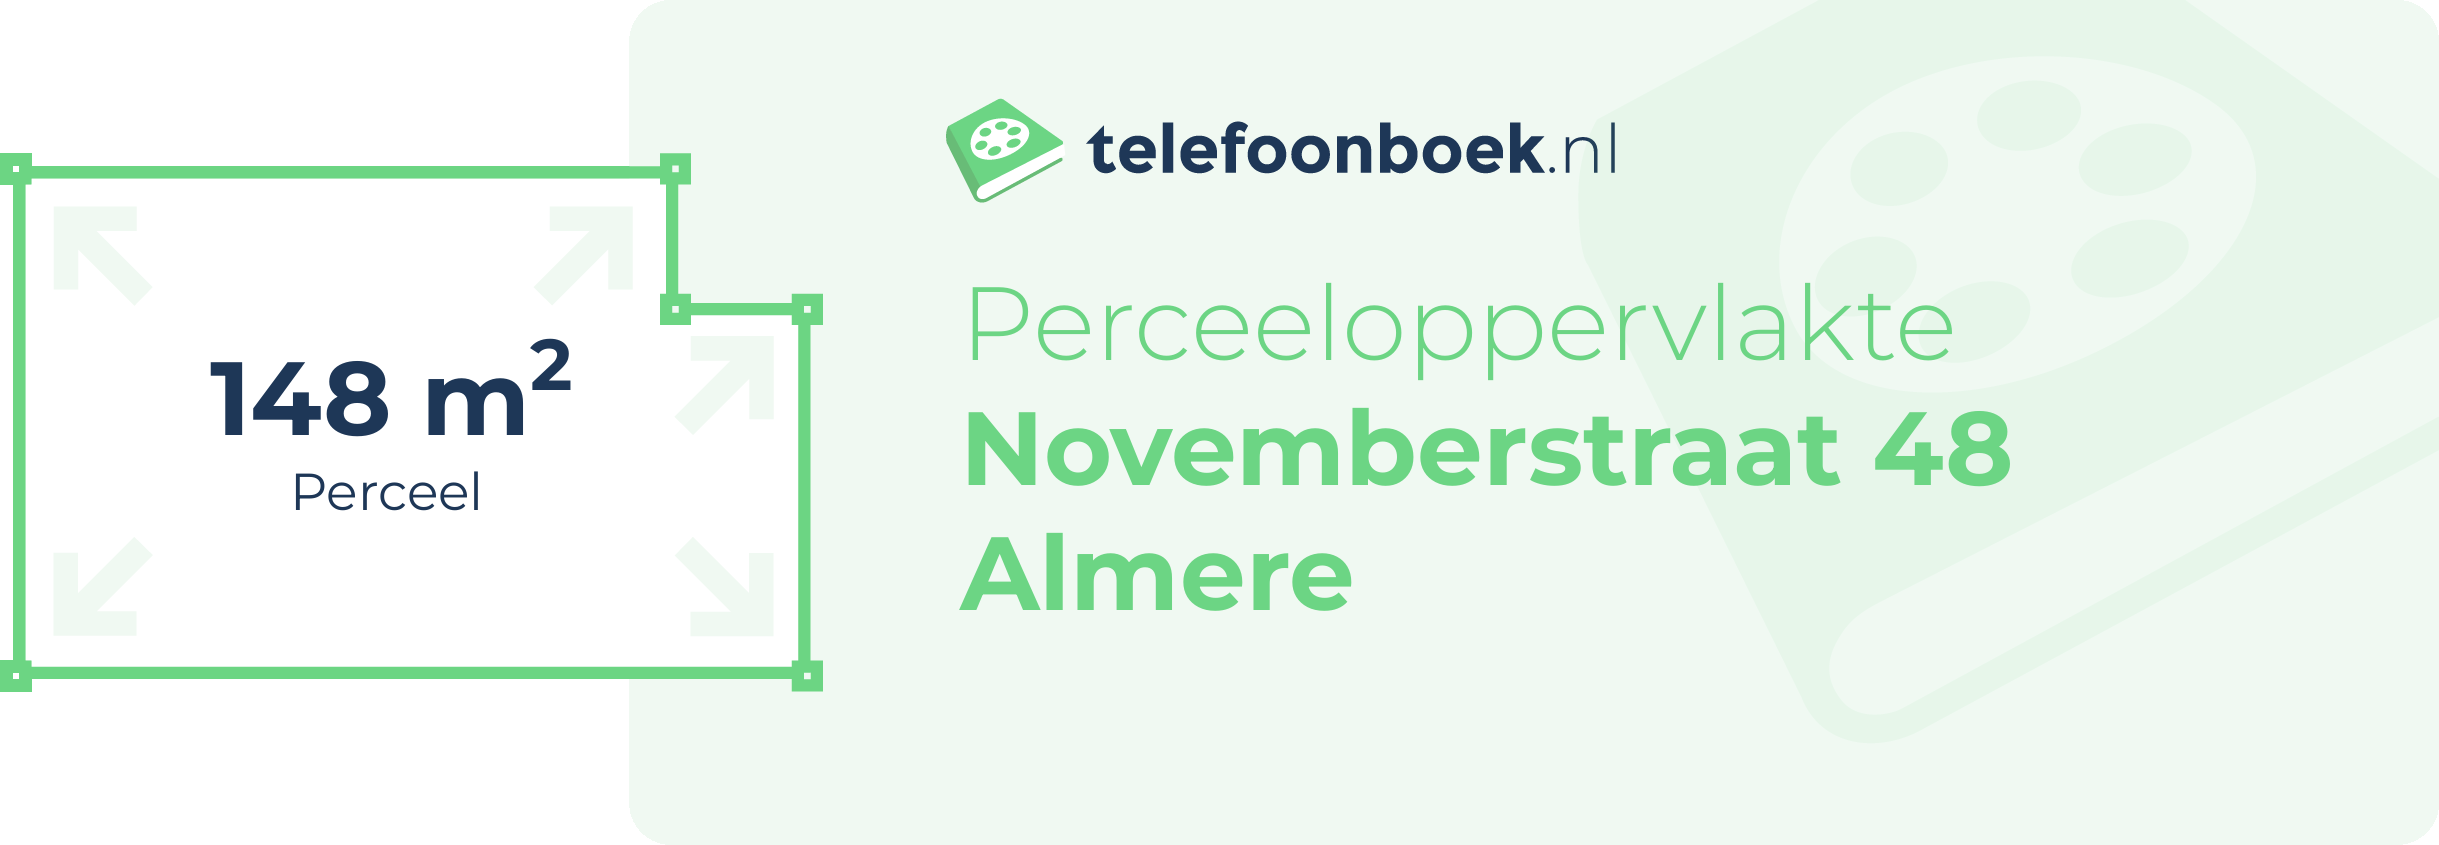 Perceeloppervlakte Novemberstraat 48 Almere